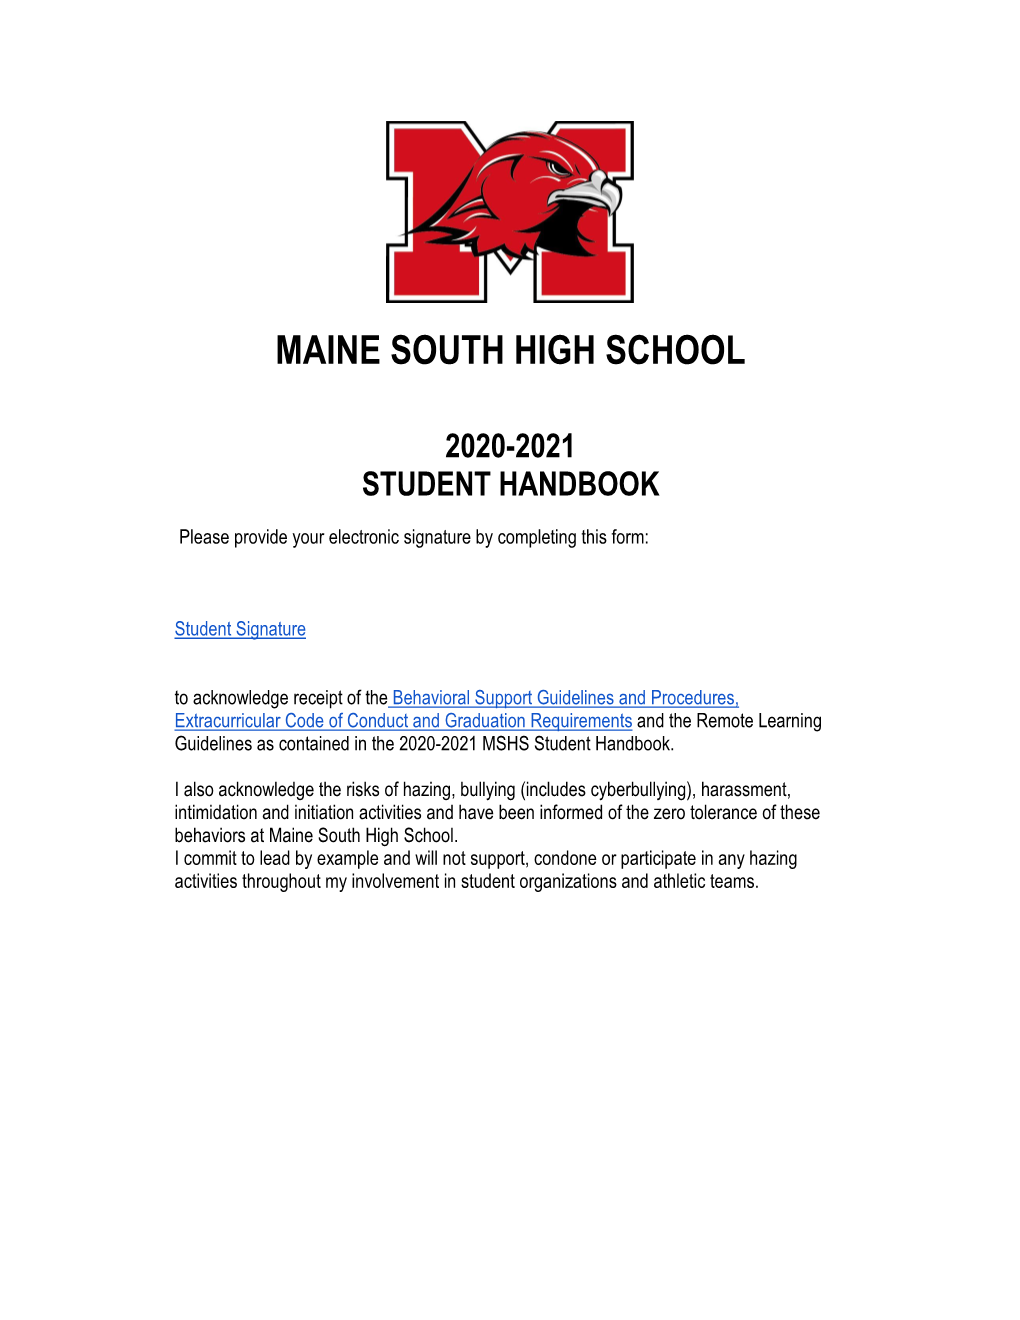 Maine South High School 2020-2021 Student Handbook